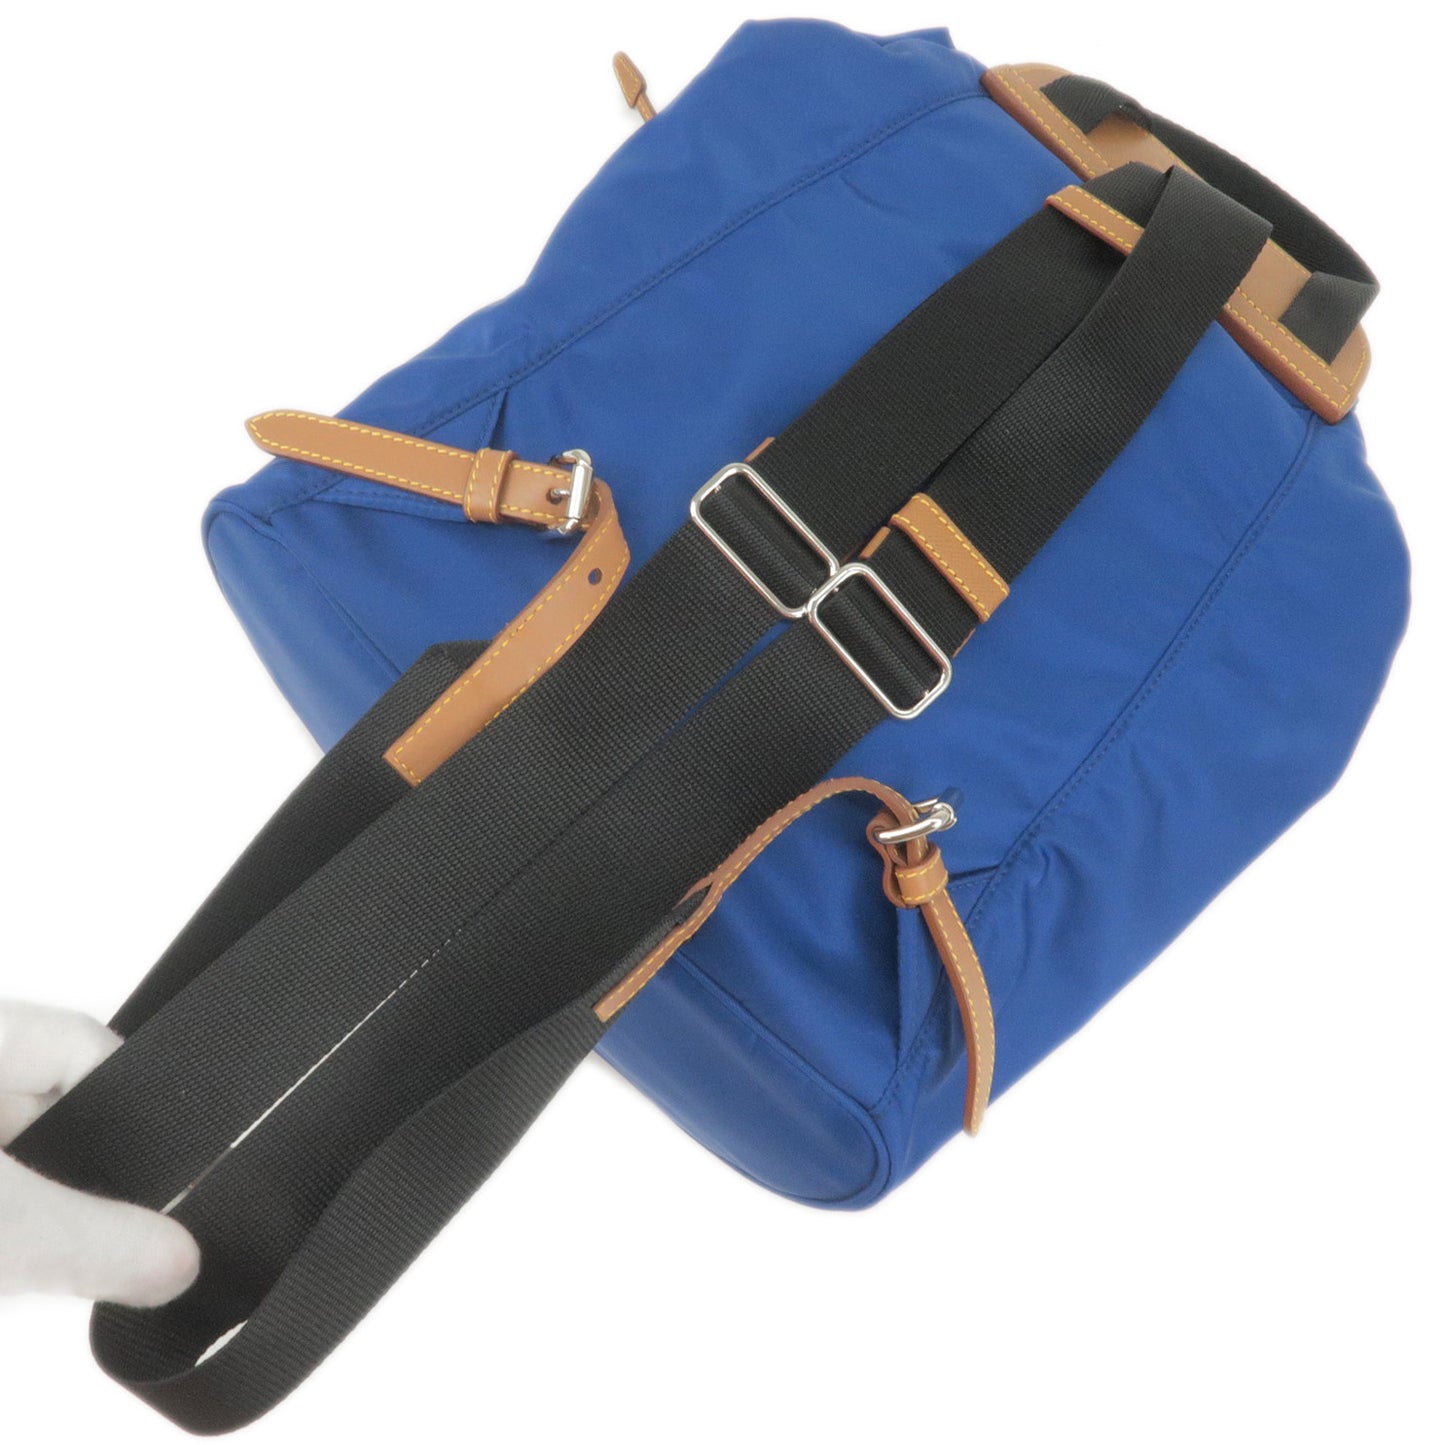 PRADA Logo Nylon Leather Ruck Sack Back Pack Bag Blue Brown 1BZ064